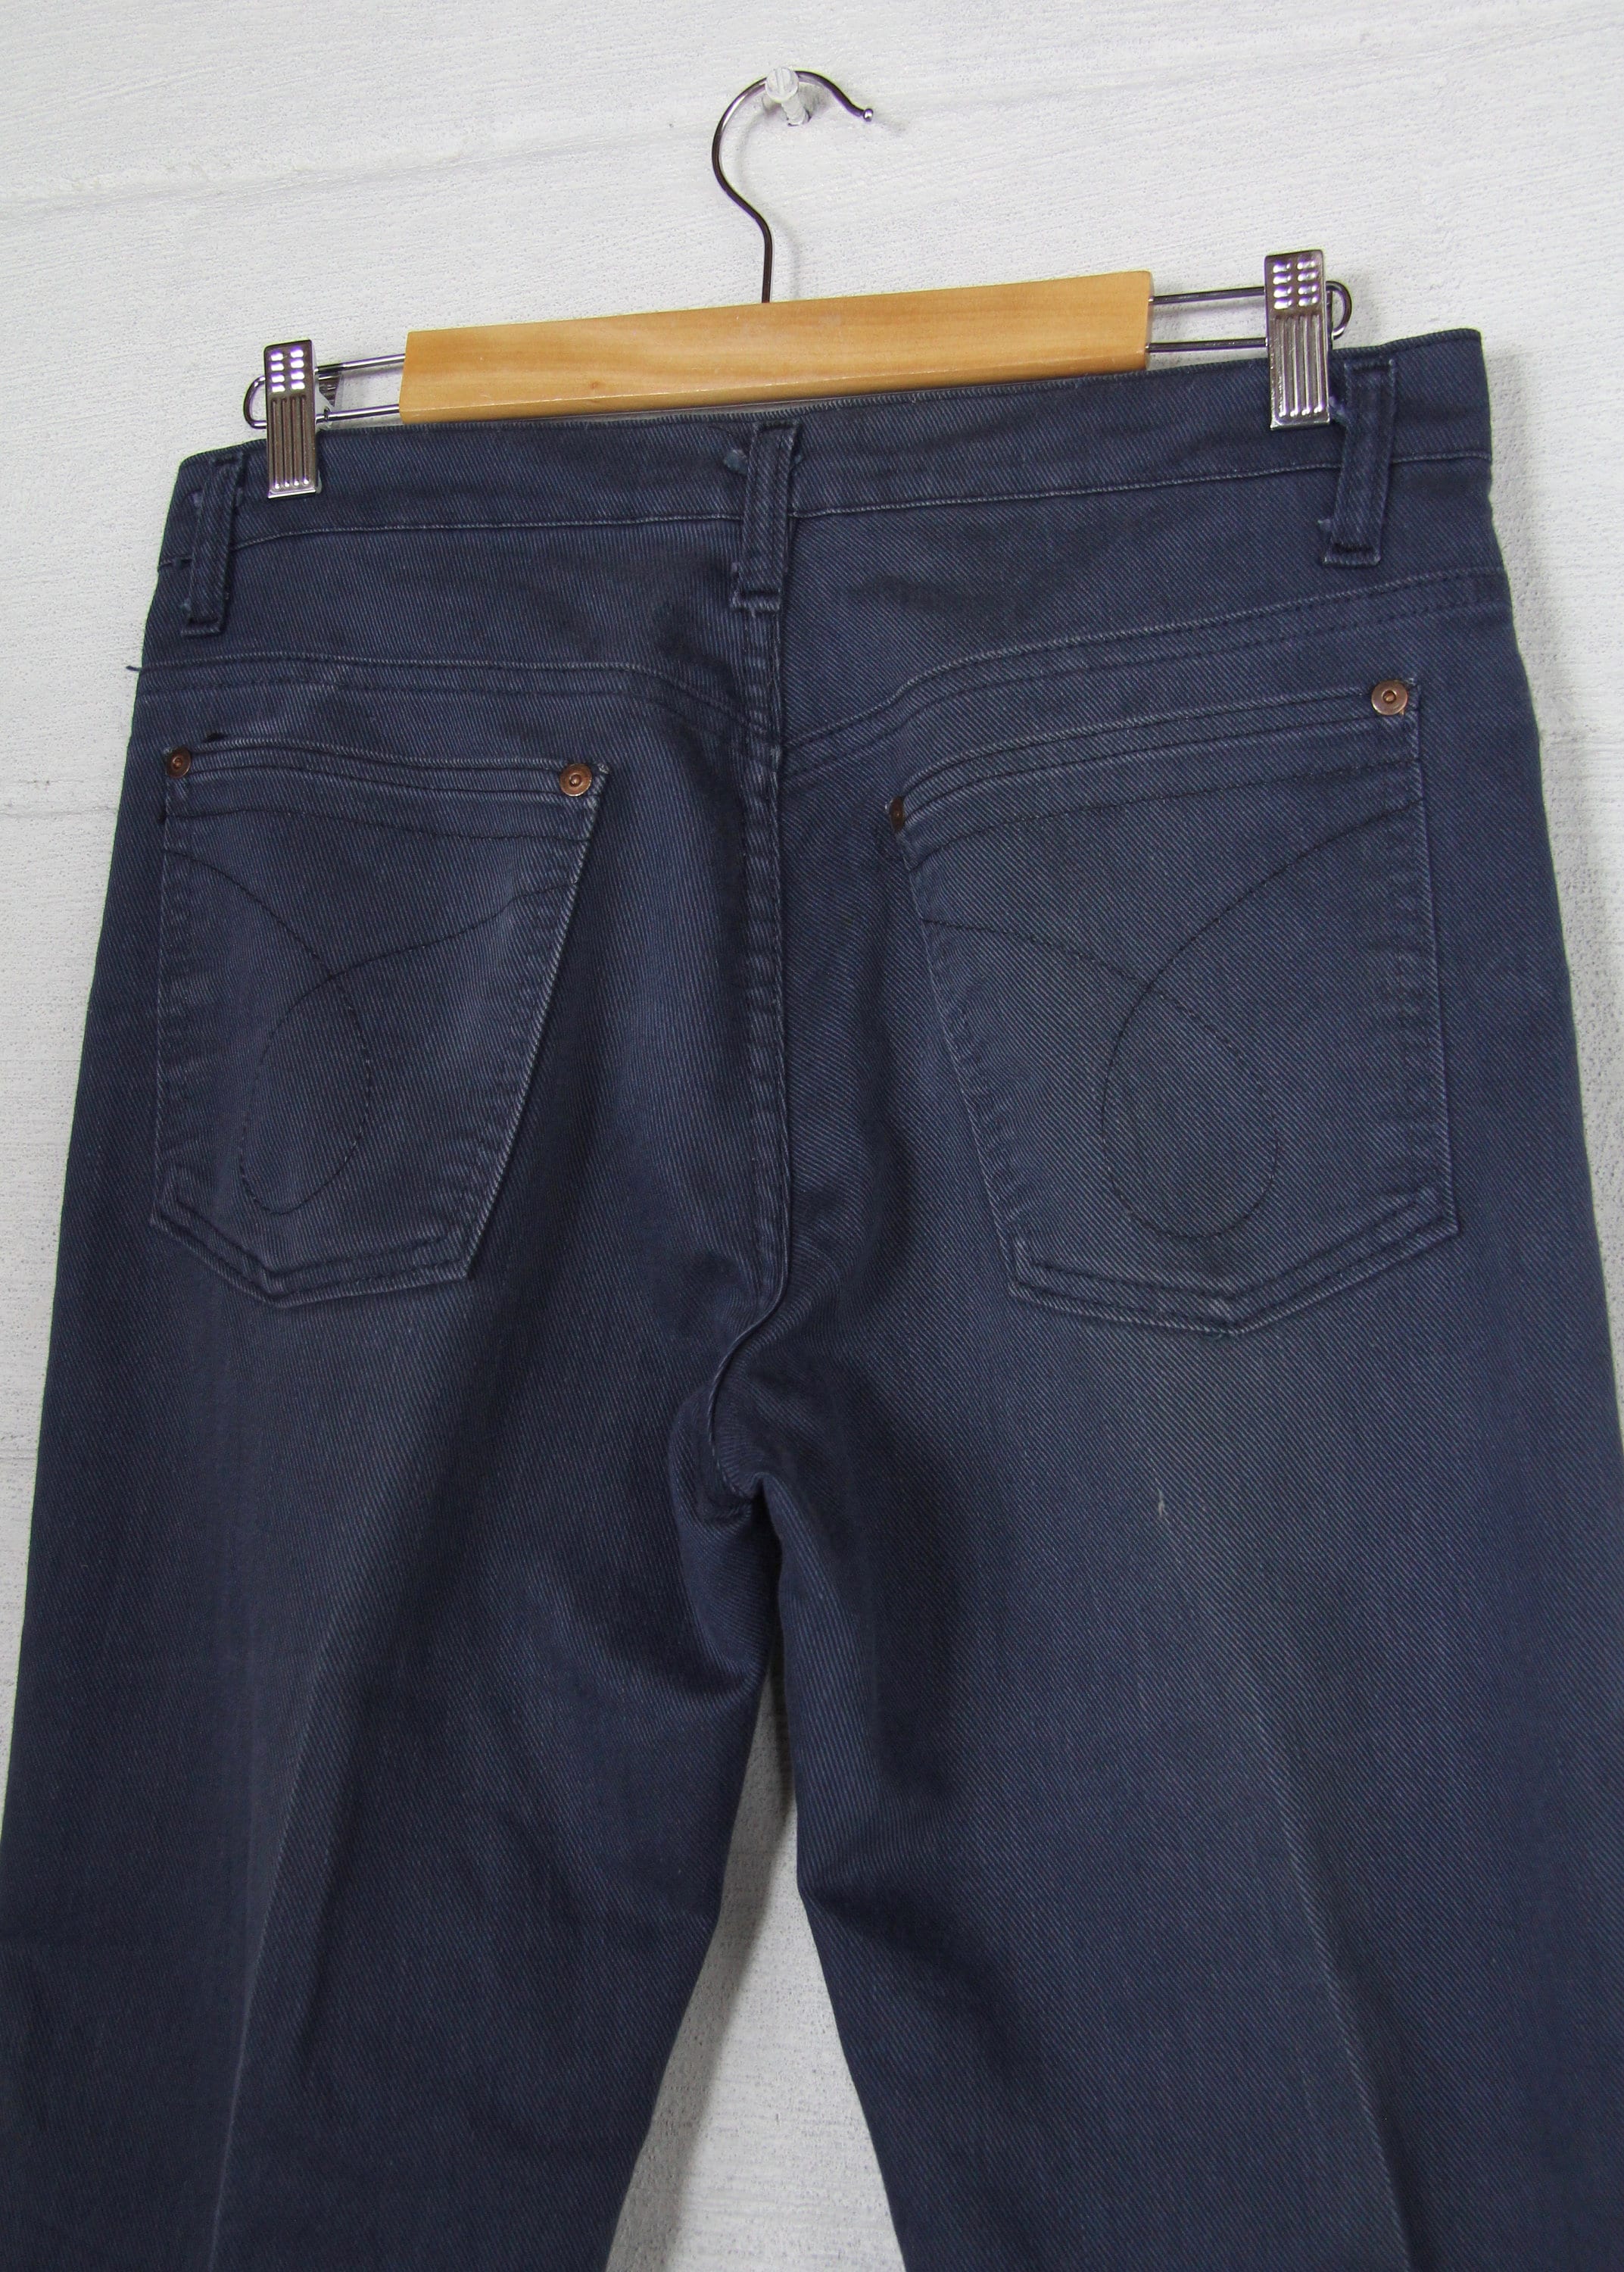 Men's Sears 70's Jeans Faded Dark Blue Cotton Work Pants Boot Cut ...